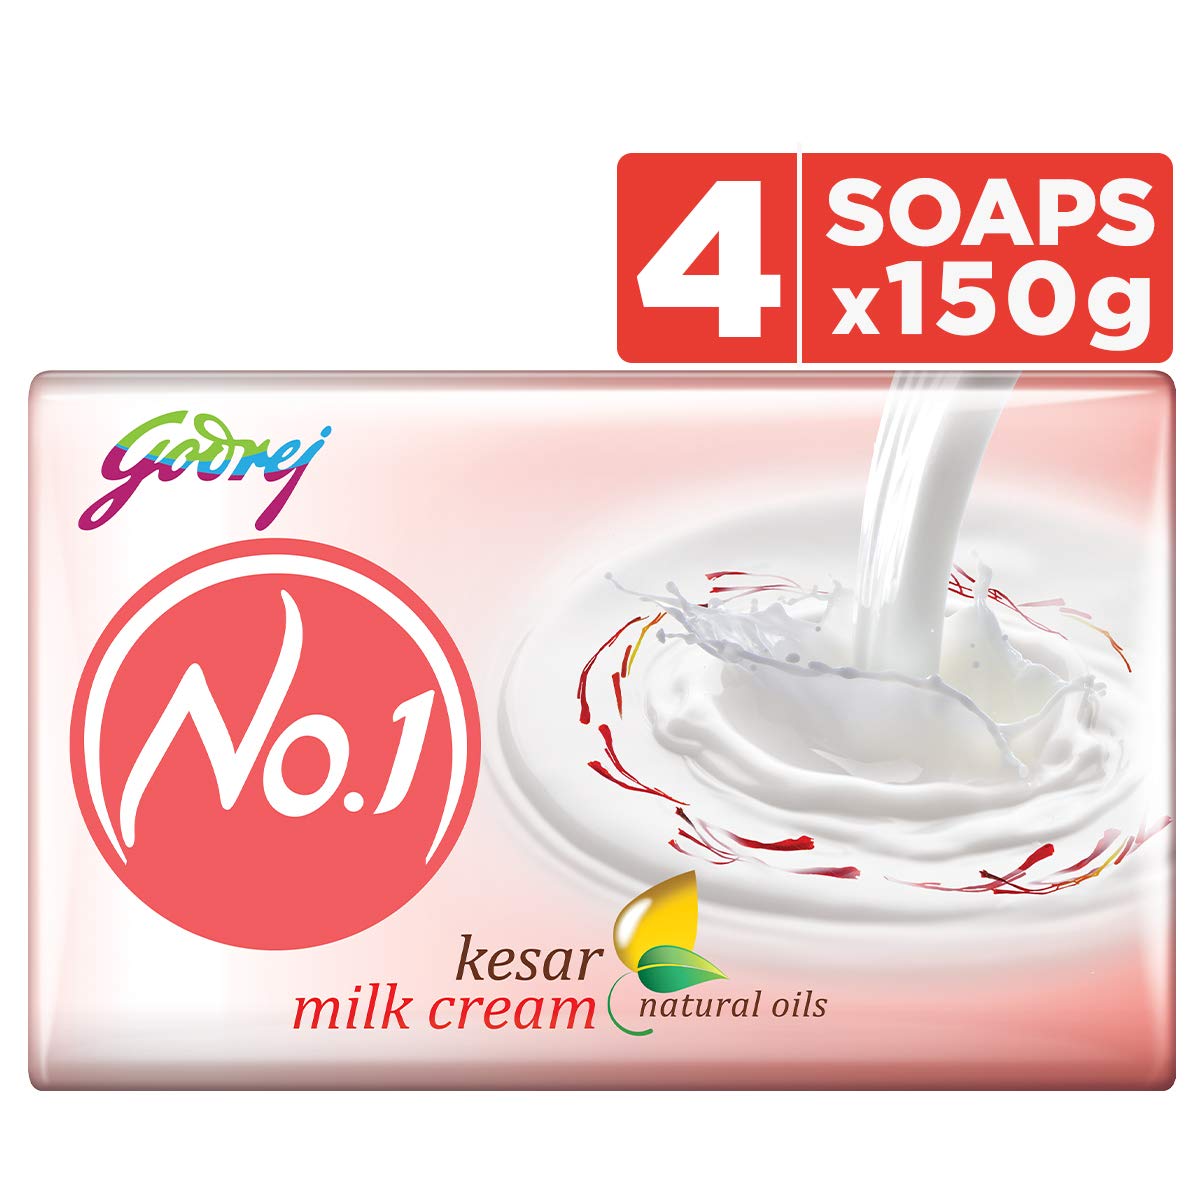 Godrej No.1 Bathing Soap Kesar & Milk Cream, 150g (Pack of 4)